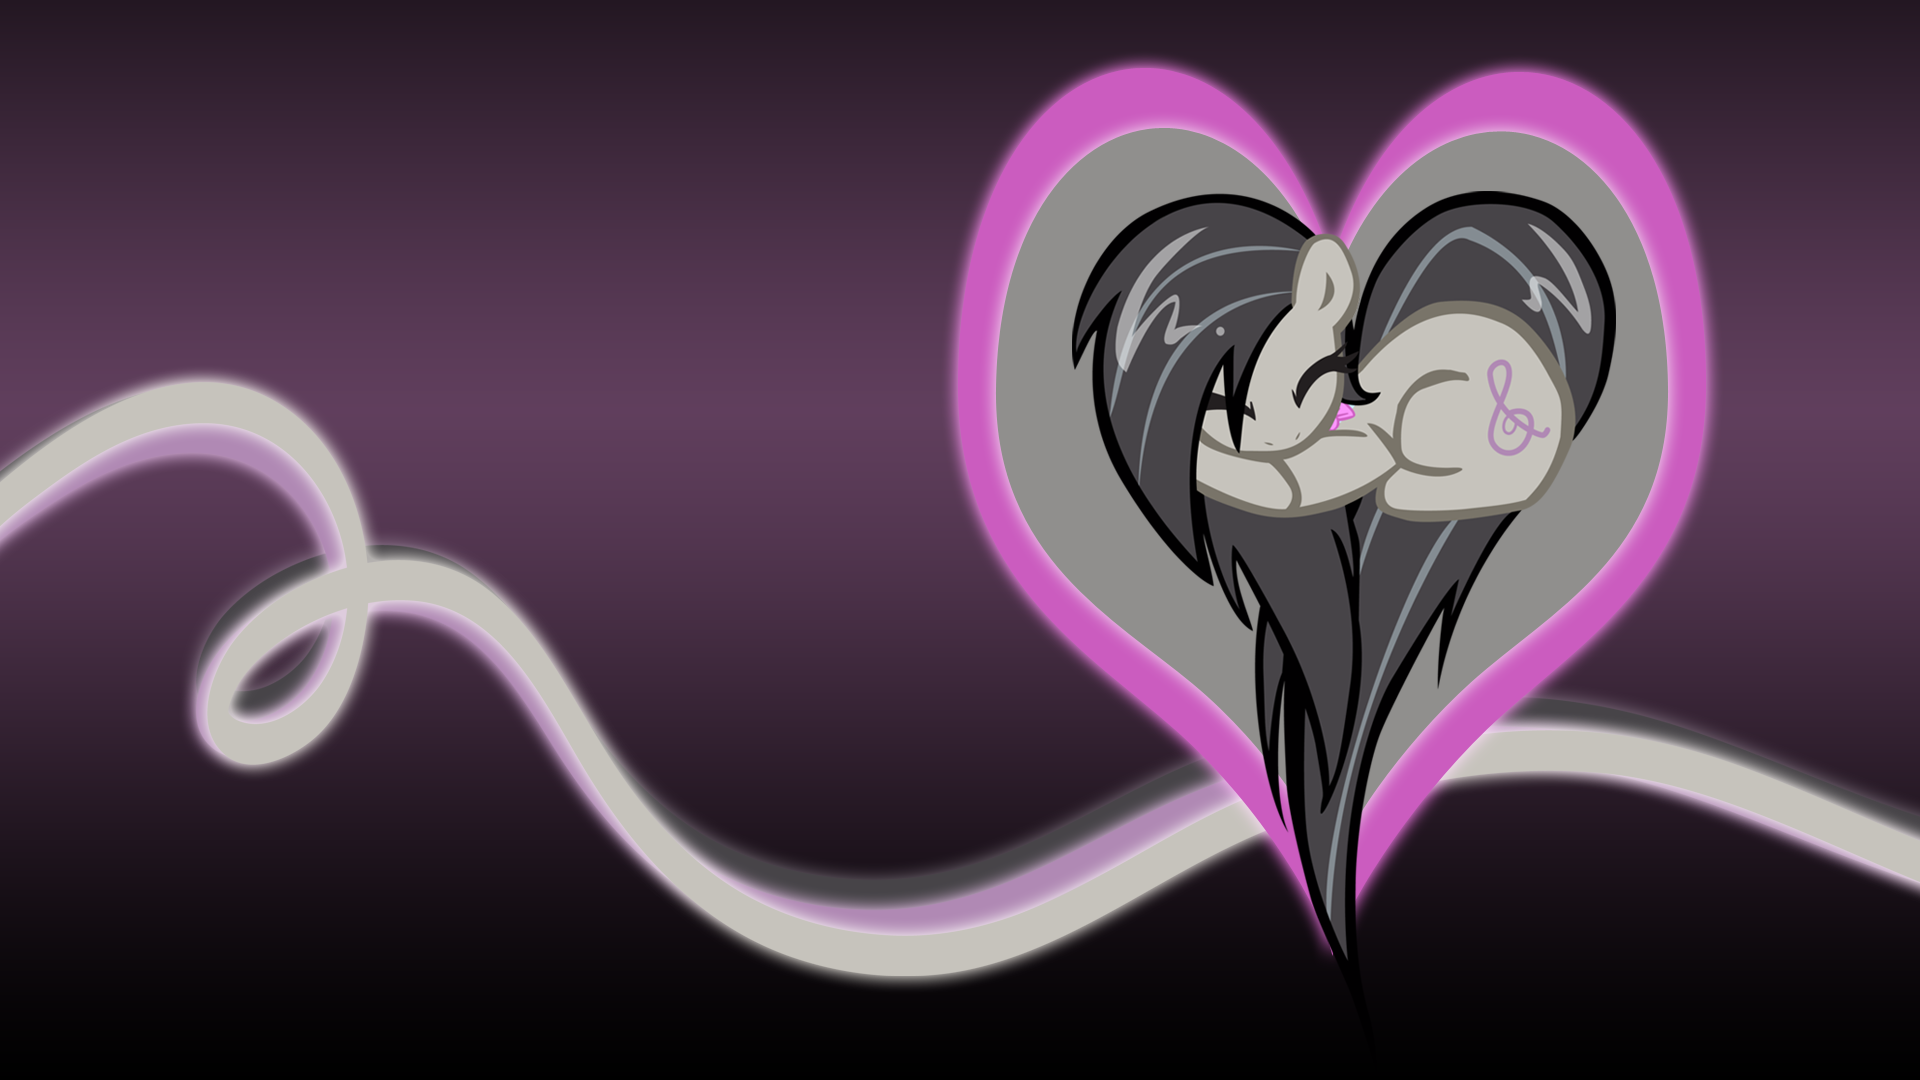 Octavia Heart BG by BambooDog and SirPayne